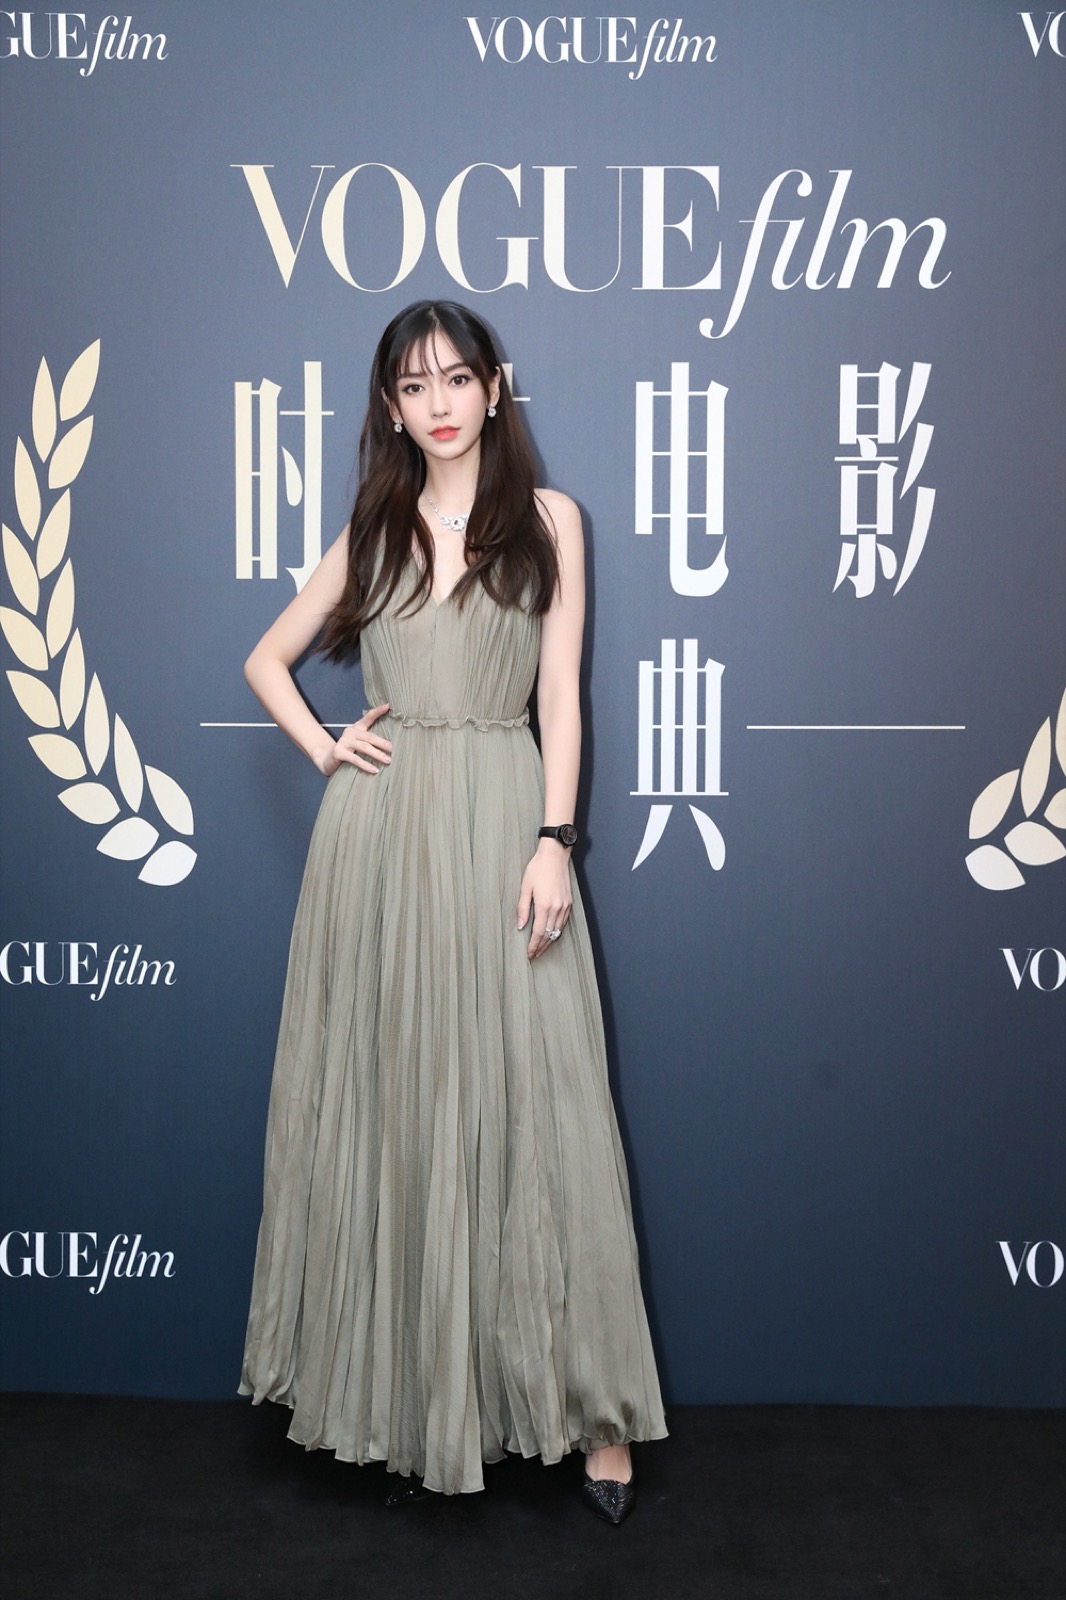 《Vogue Film时装电影盛典》于京隆重举行 展现文艺新风尚